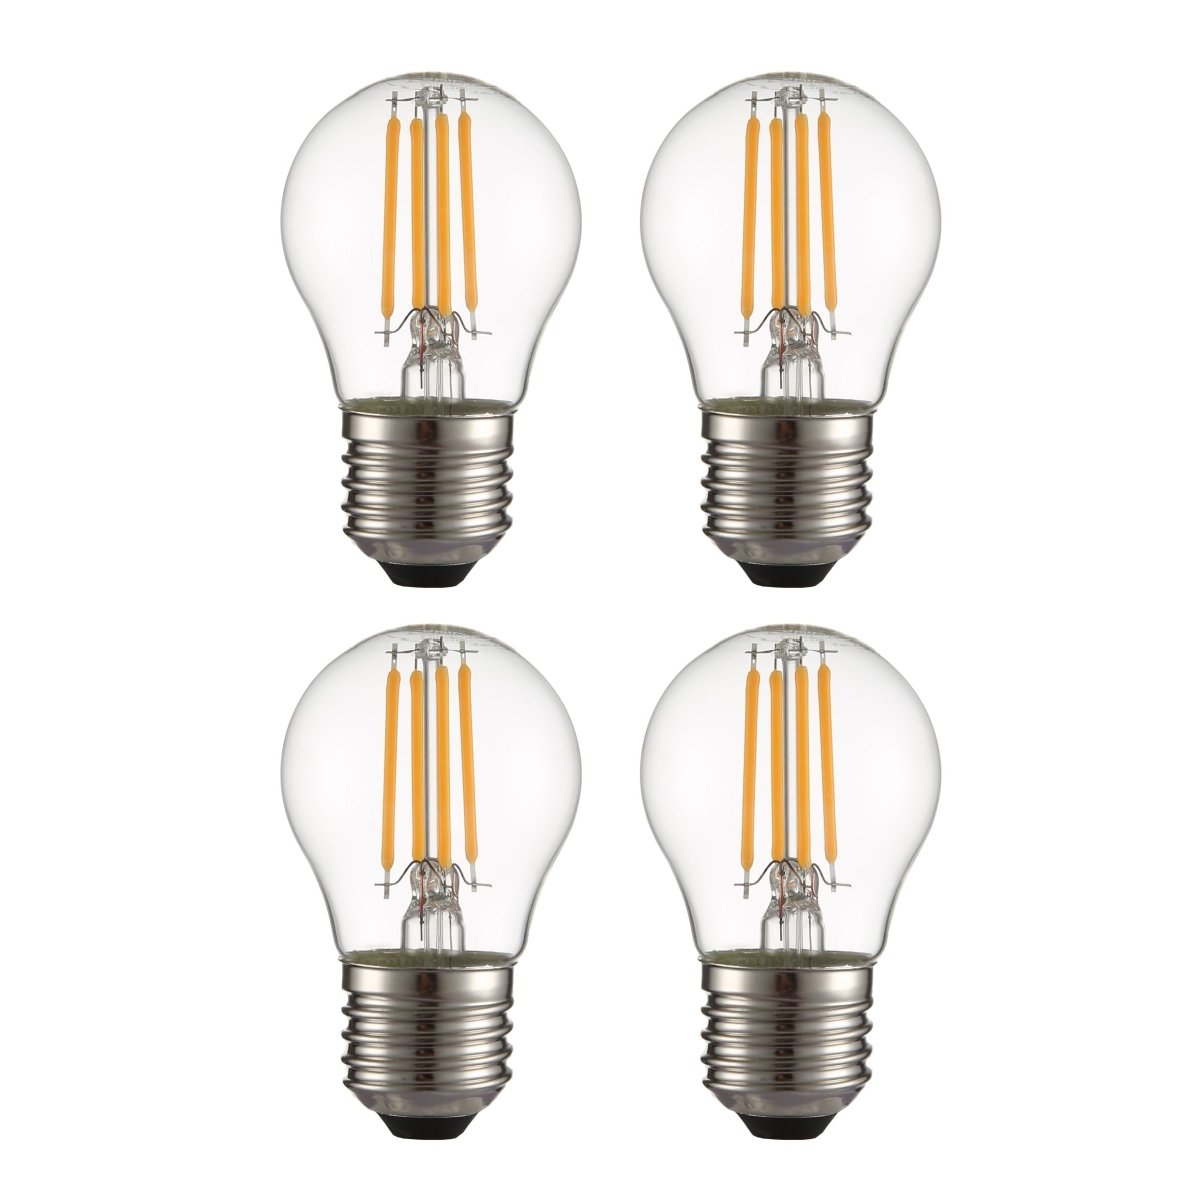 E27 LED Bulbs - ES Edison Screw E27 Light Bulbs